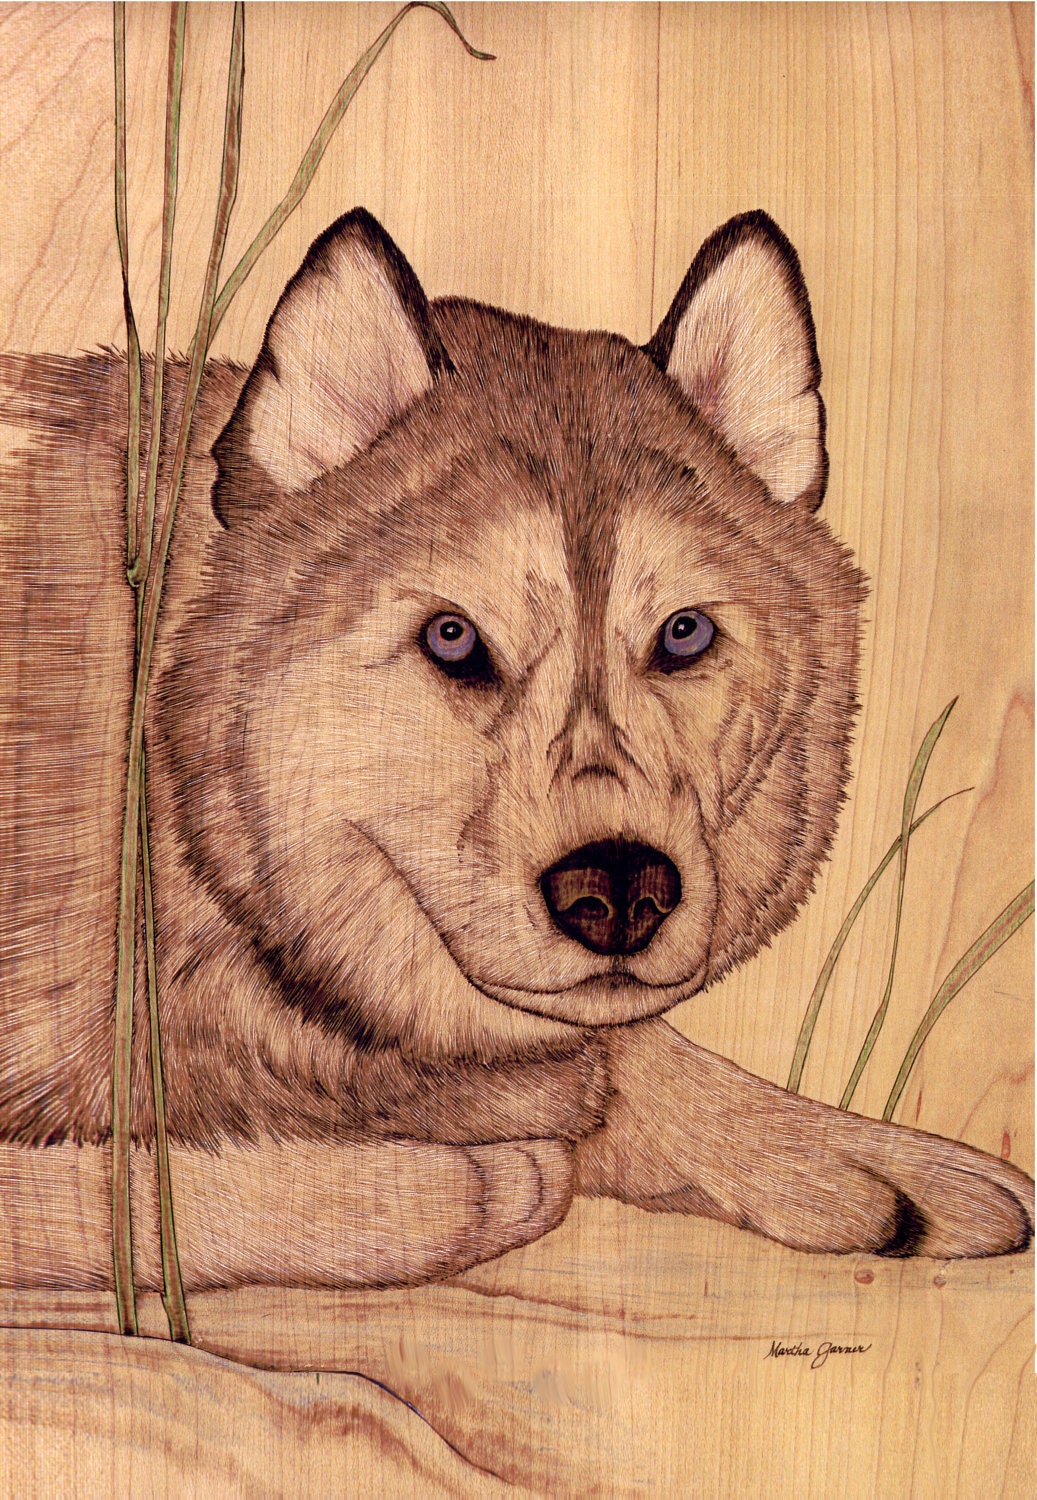 Keen Observer - Siberian Husky DogSled DogMalamuteWolfDog